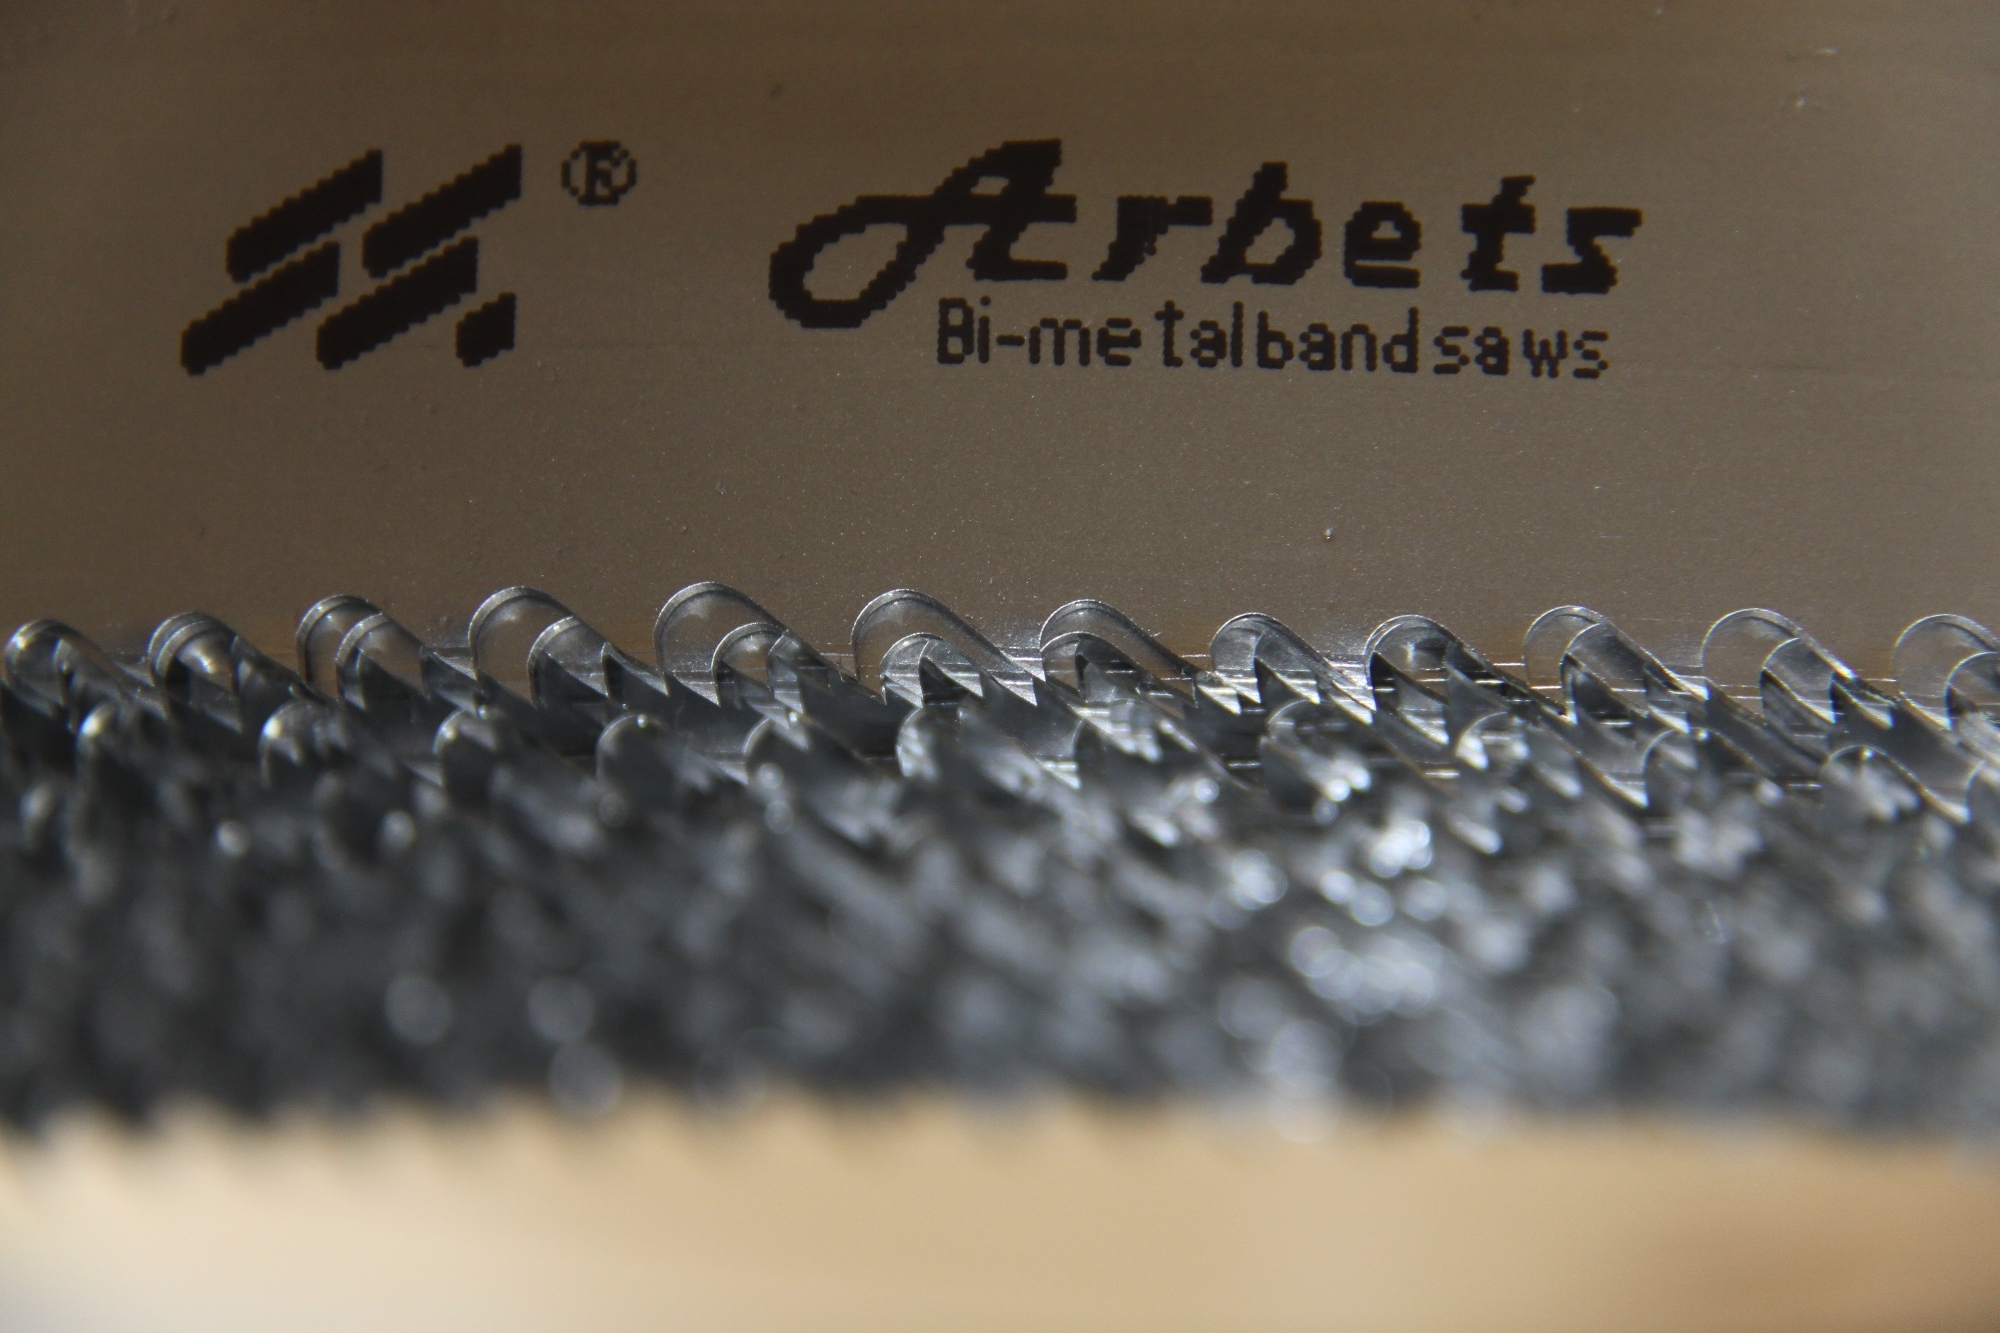 Bimetal Blade For Steel Cutting